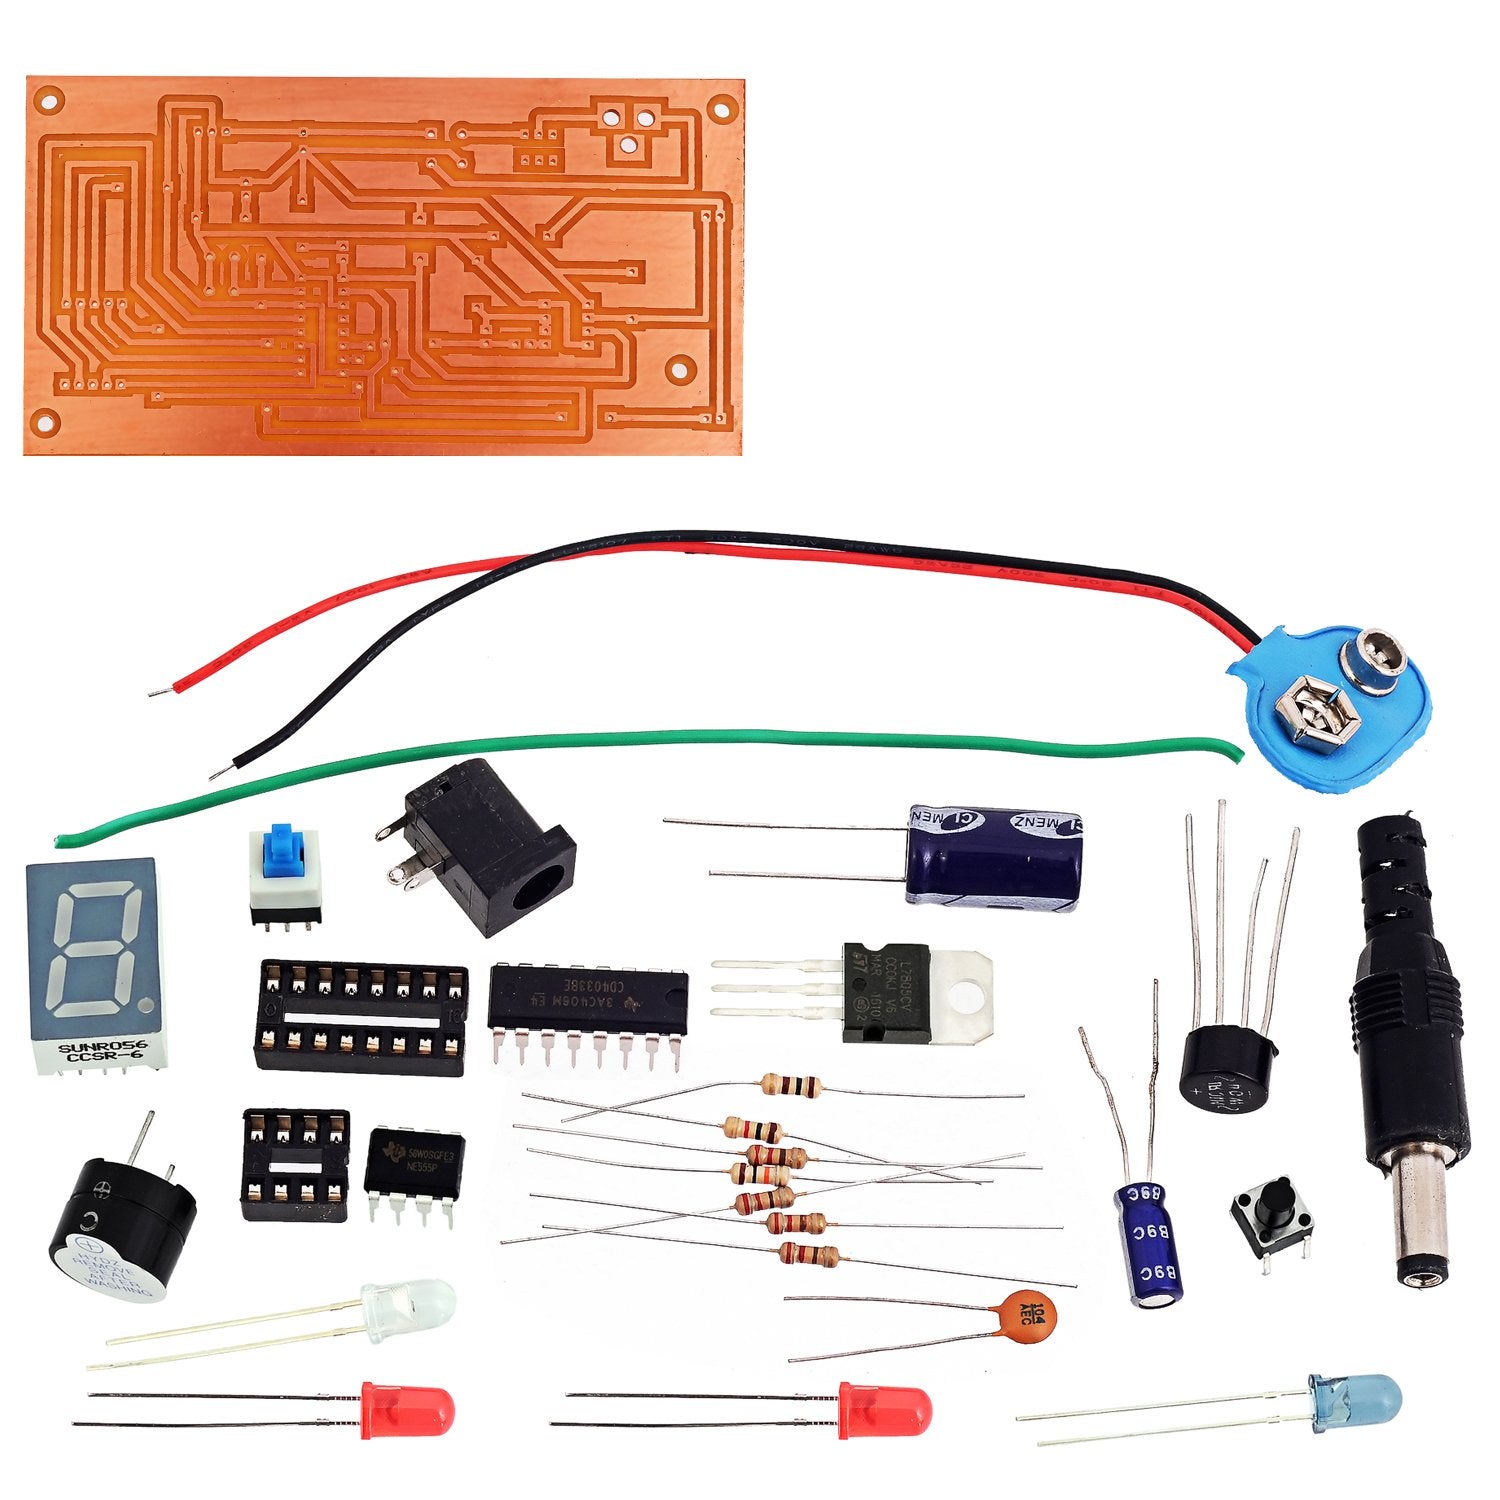 educational-electronic-kits